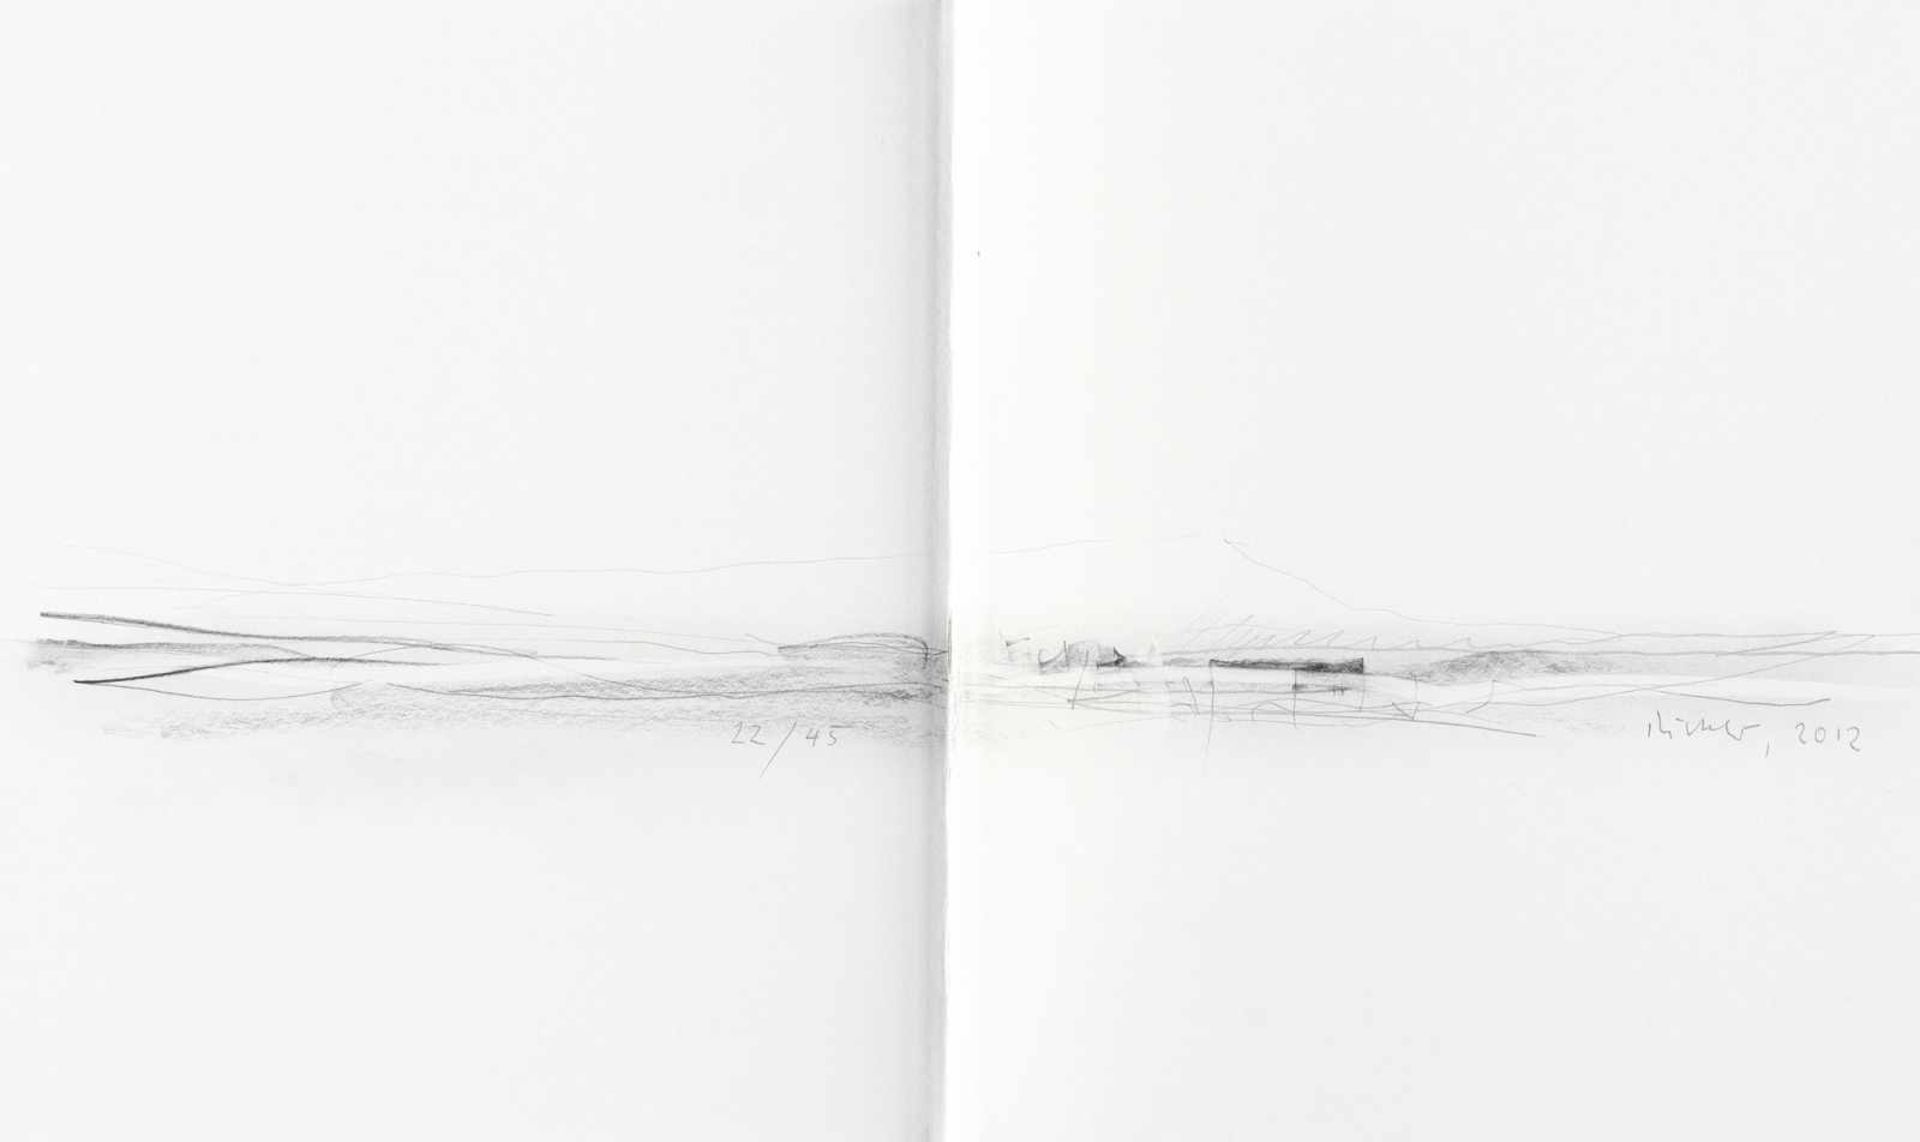 Gerhard Richter1932 Dresdendessins et aquarelles/drawings & watercolors 1957 - 2008Bleistift auf